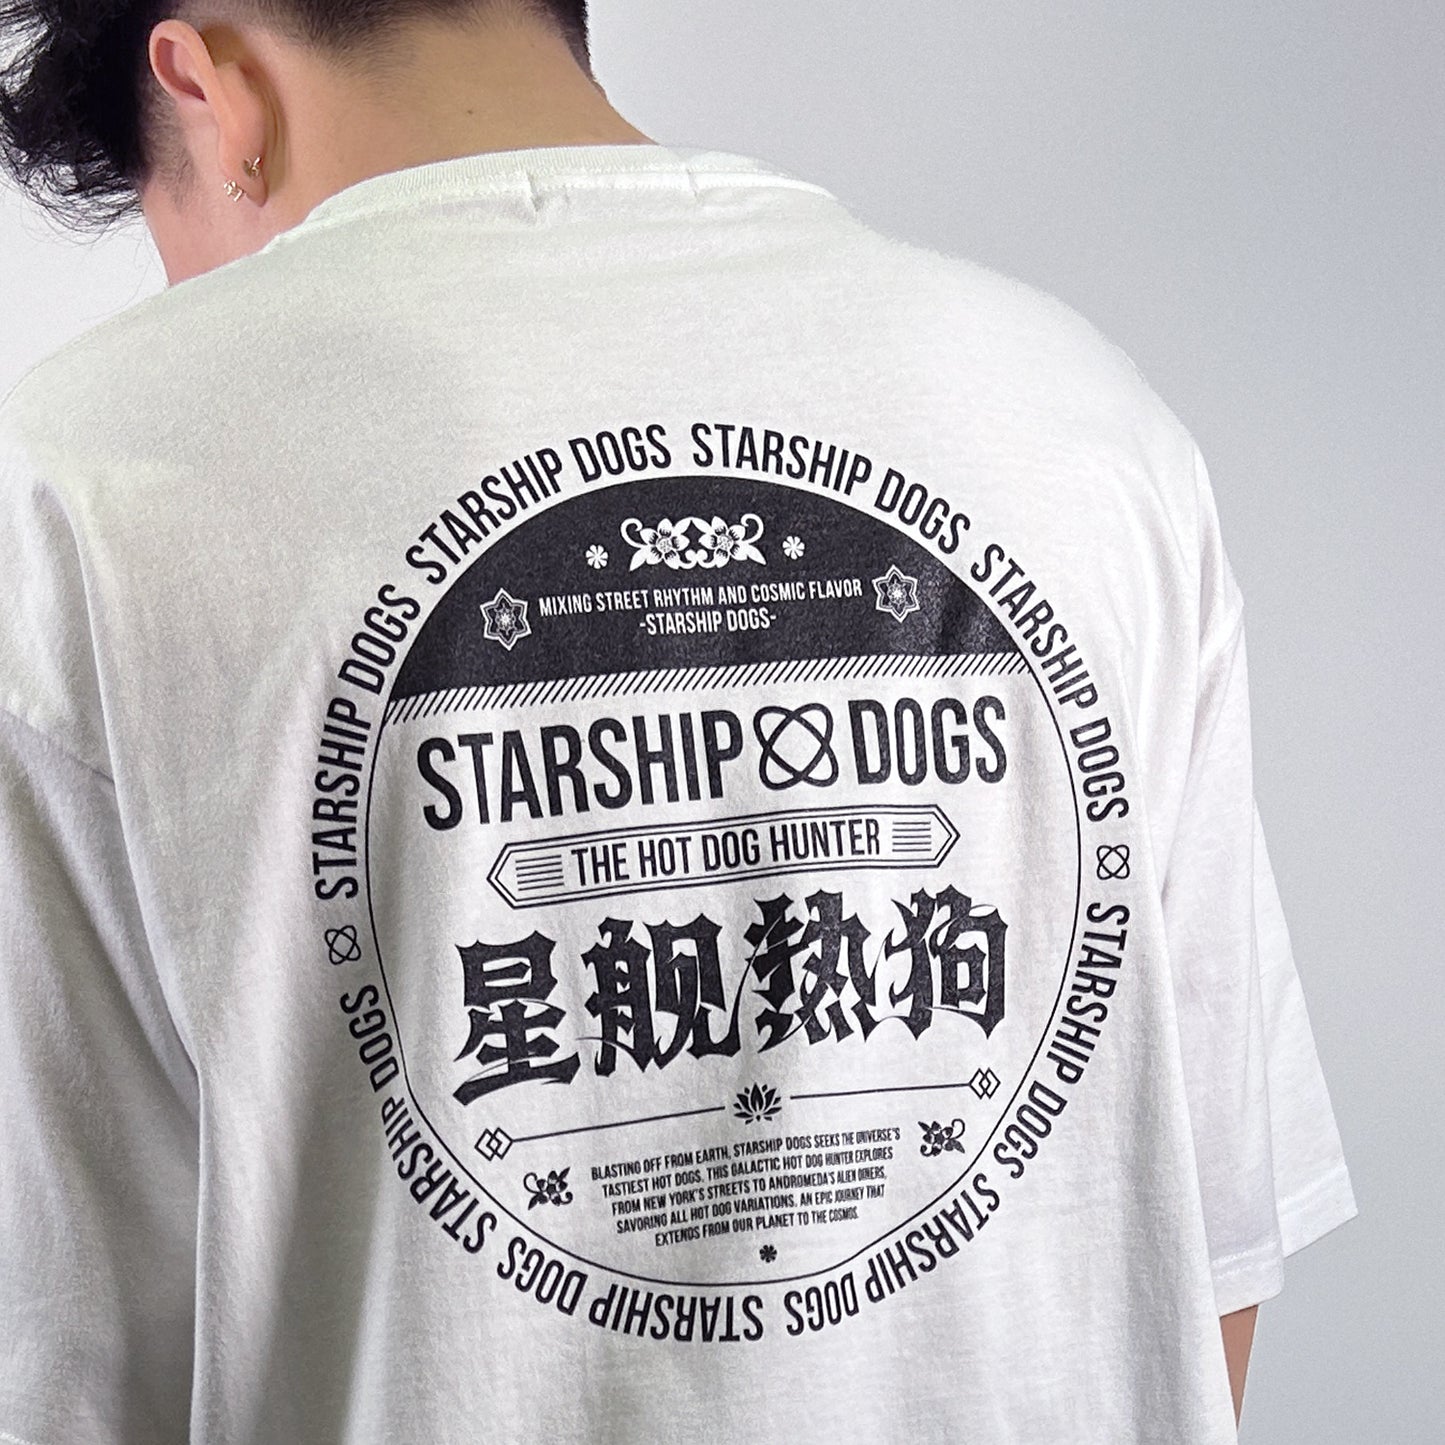 STARSHIP DOGS "星舰热狗" Tshirt